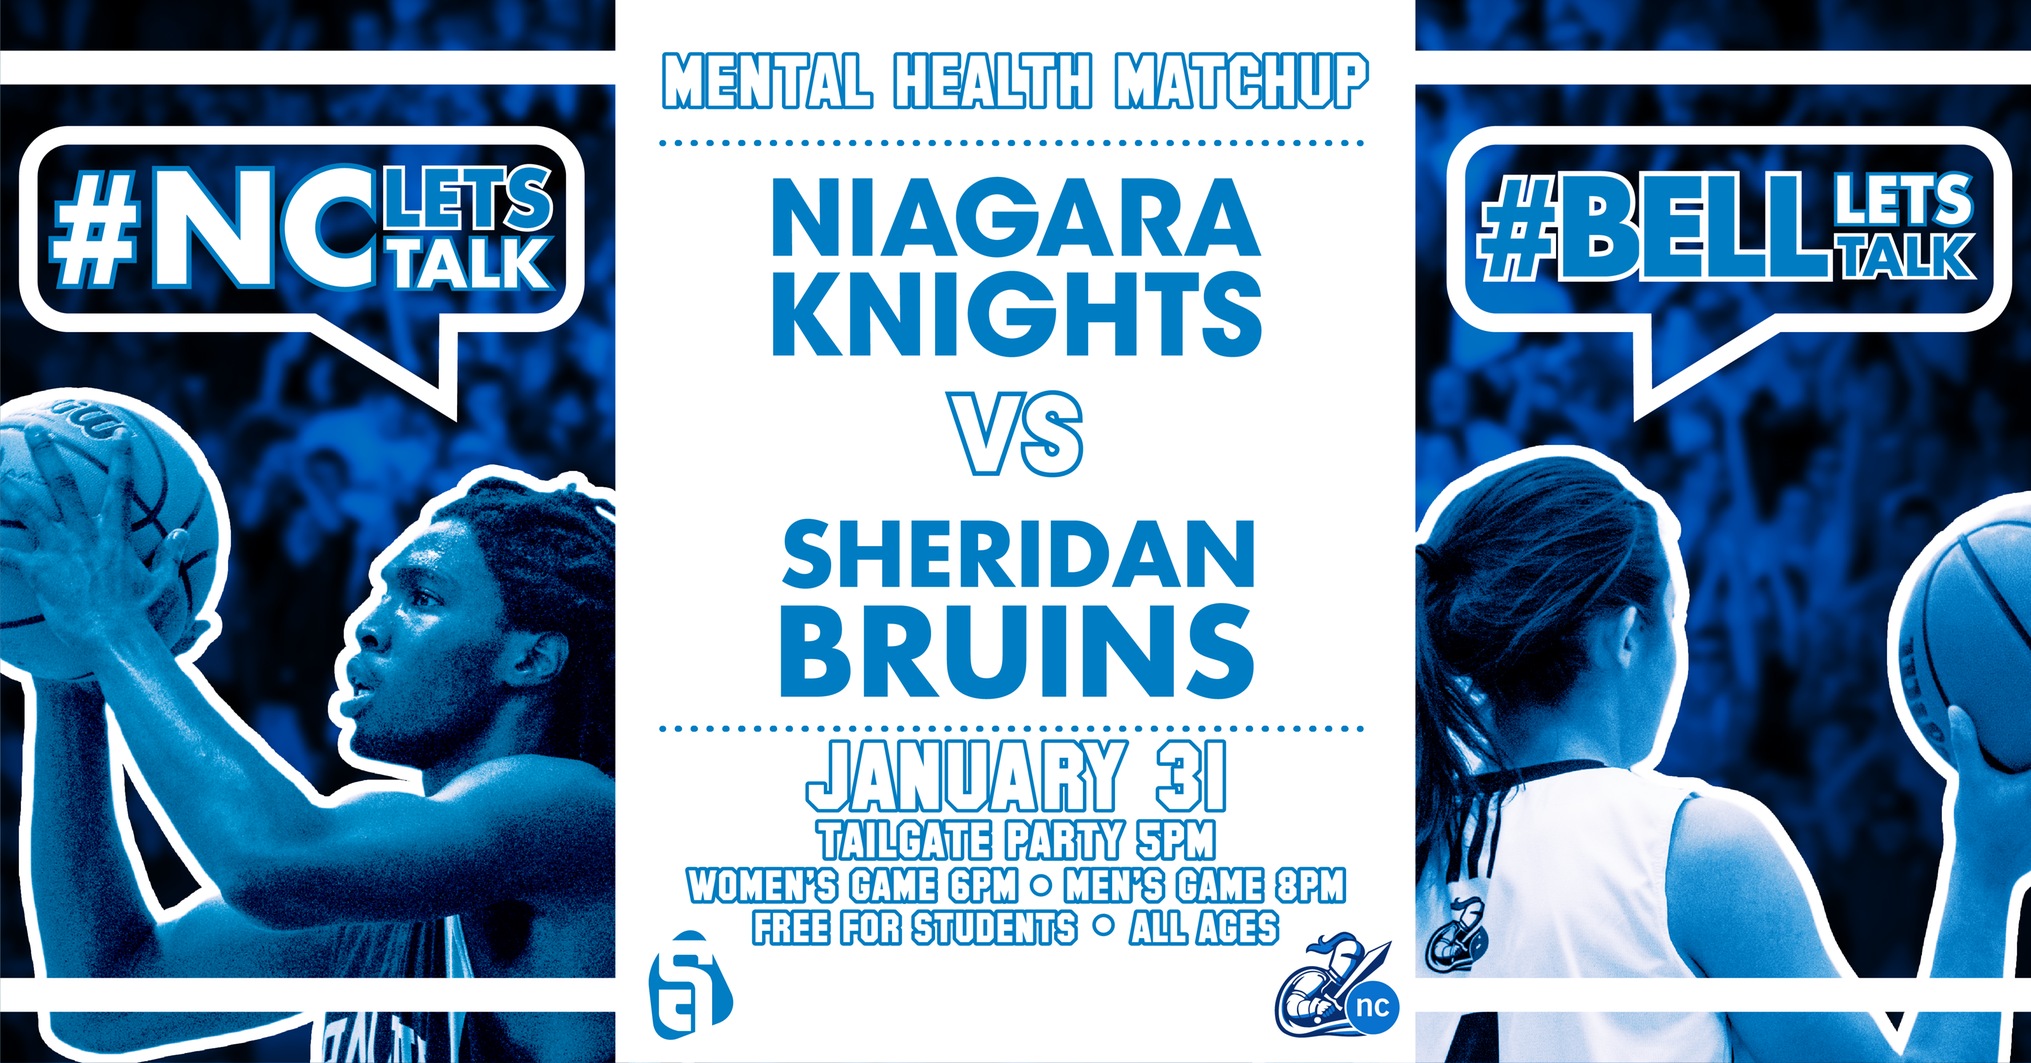 NEWS: SAC and Niagara Knights team up for #NCTalks for #BellLetsTalk Mental Health Match-up